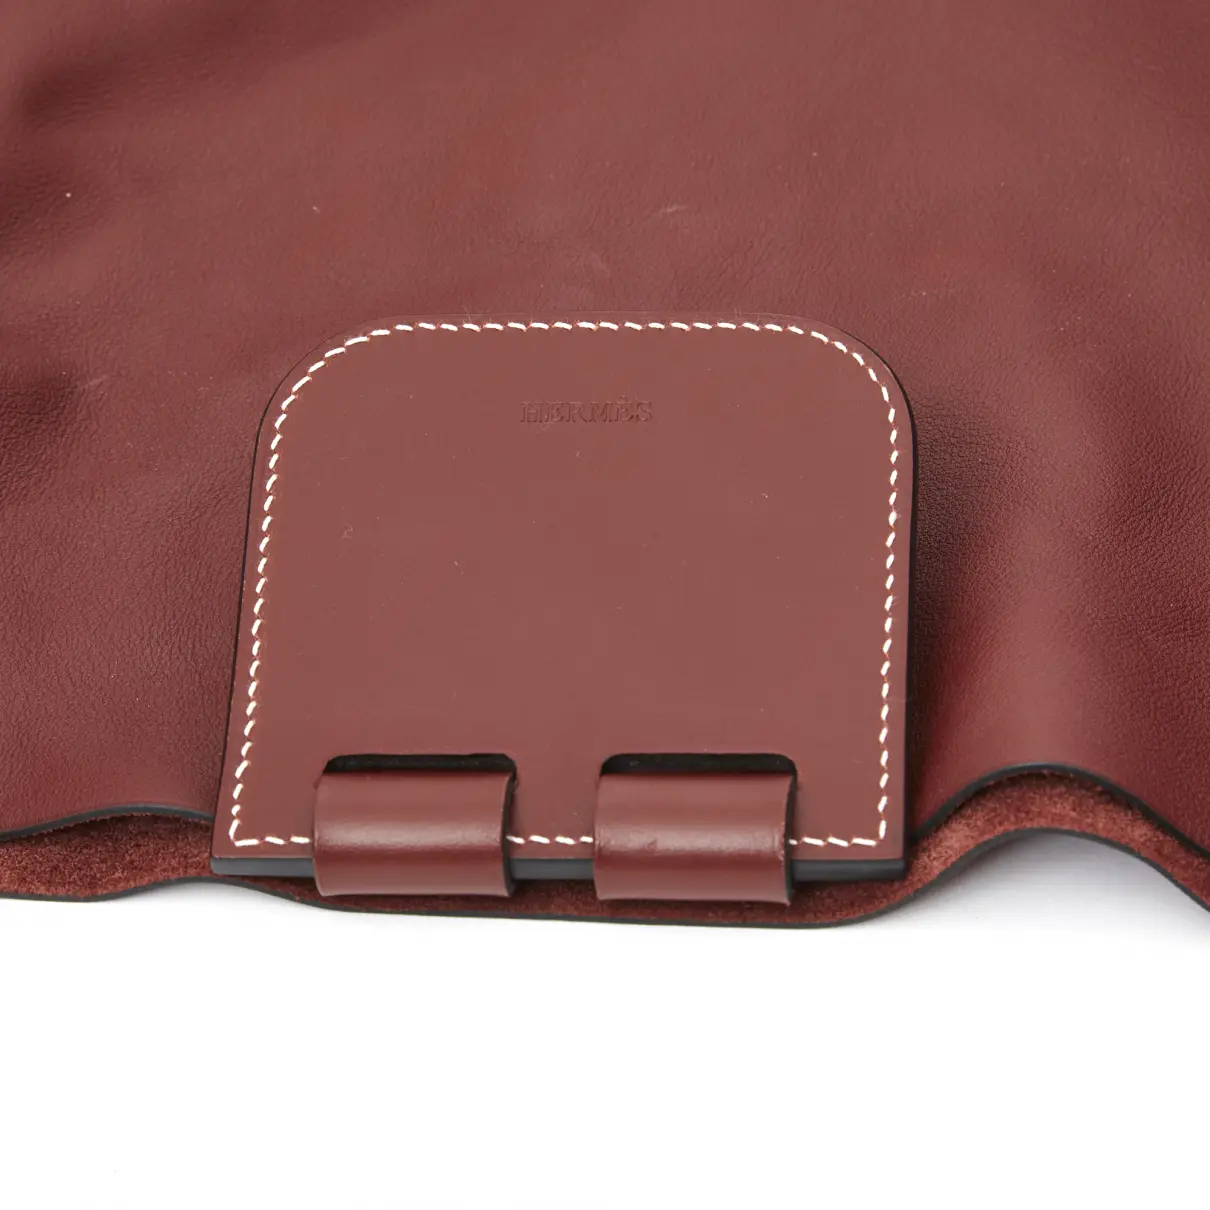 Virevolte leather handbag Hermès